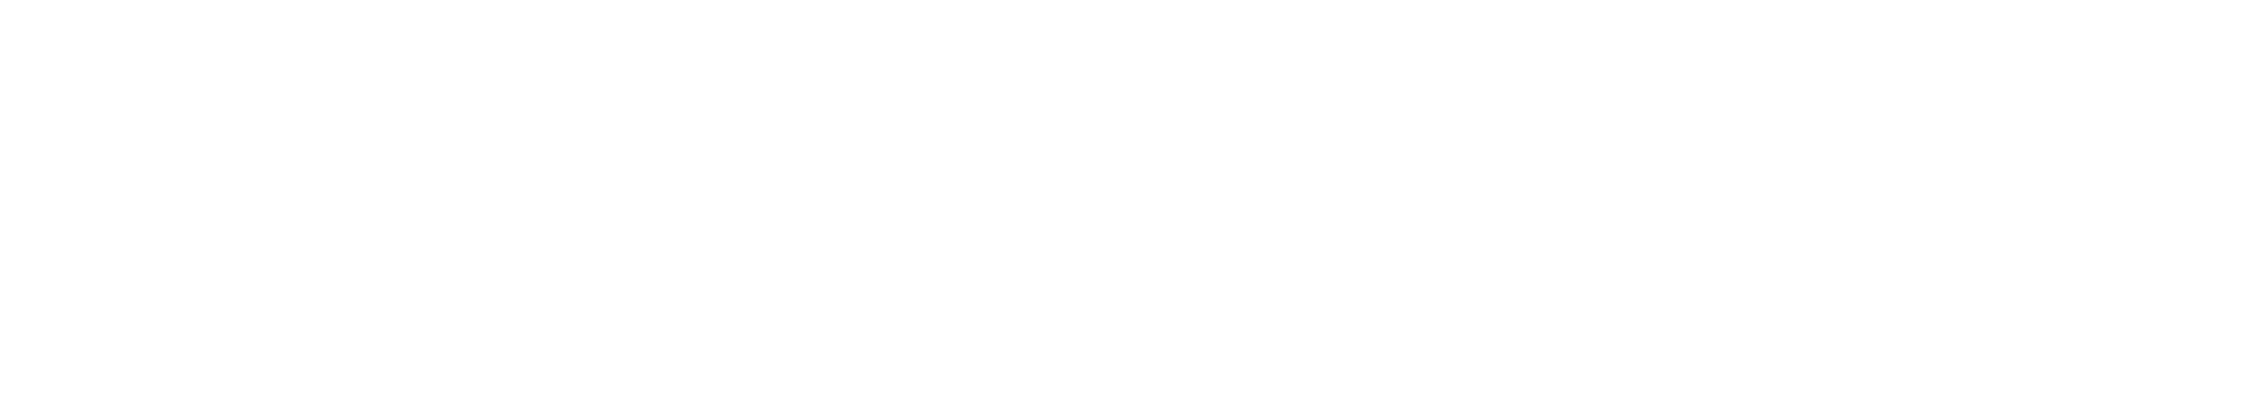 mft suite logo